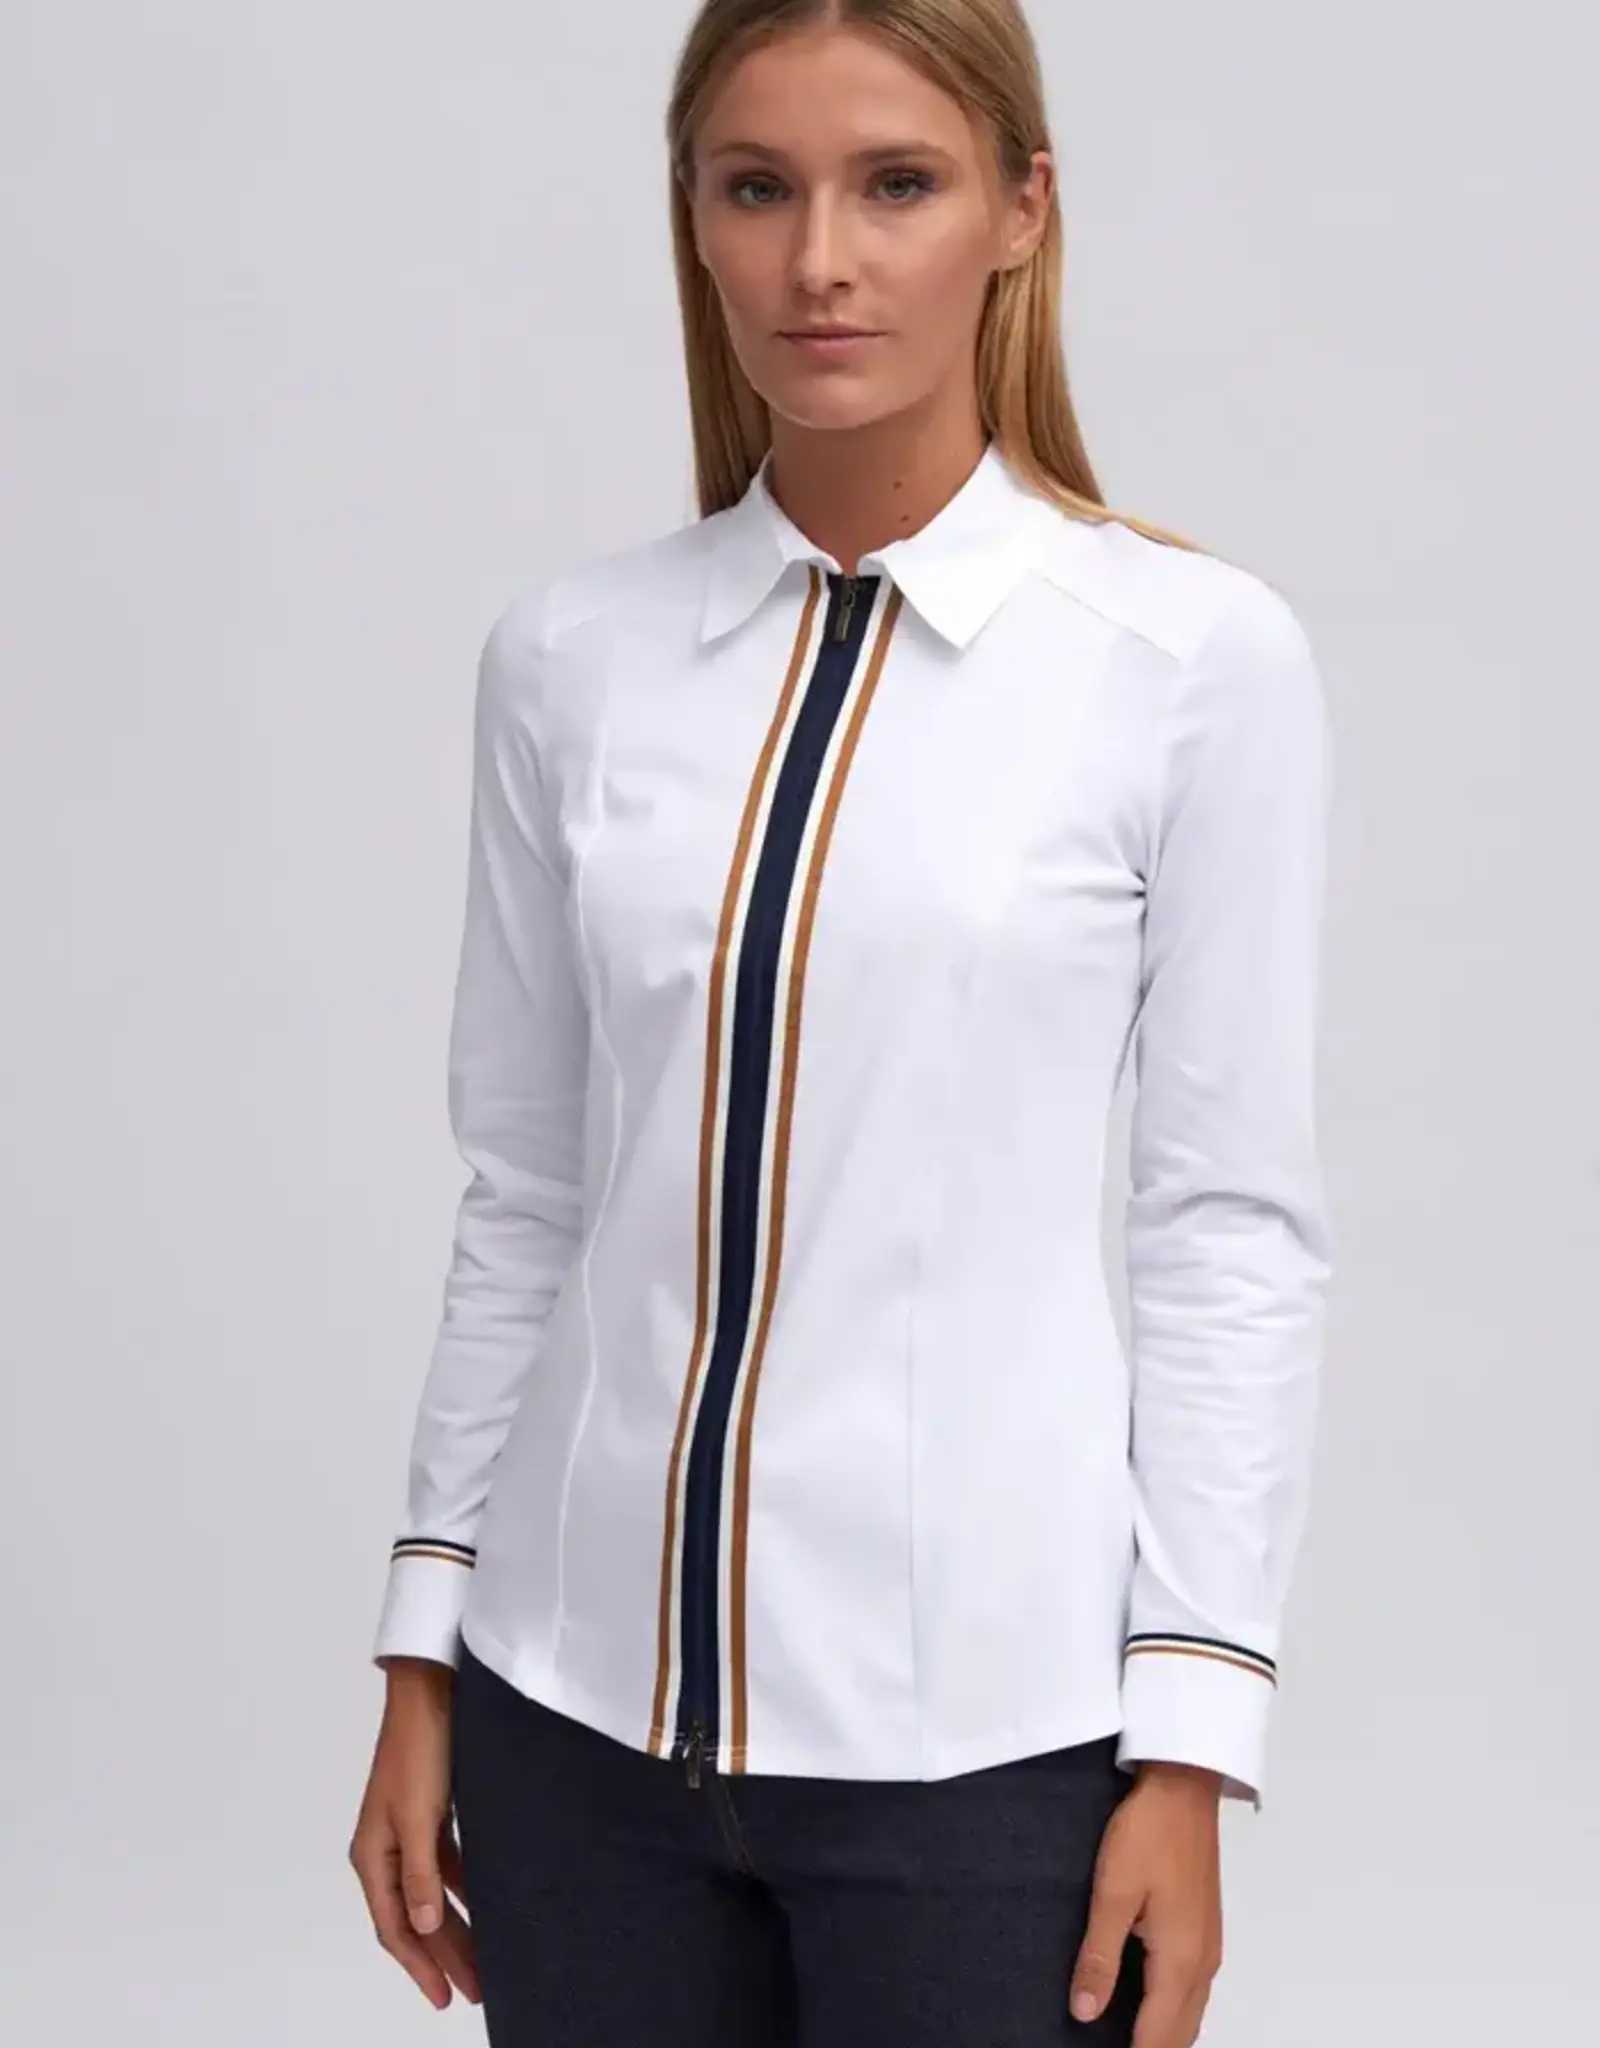 Bariloche Onega Zip Up White Shirt w/Navy Stripe